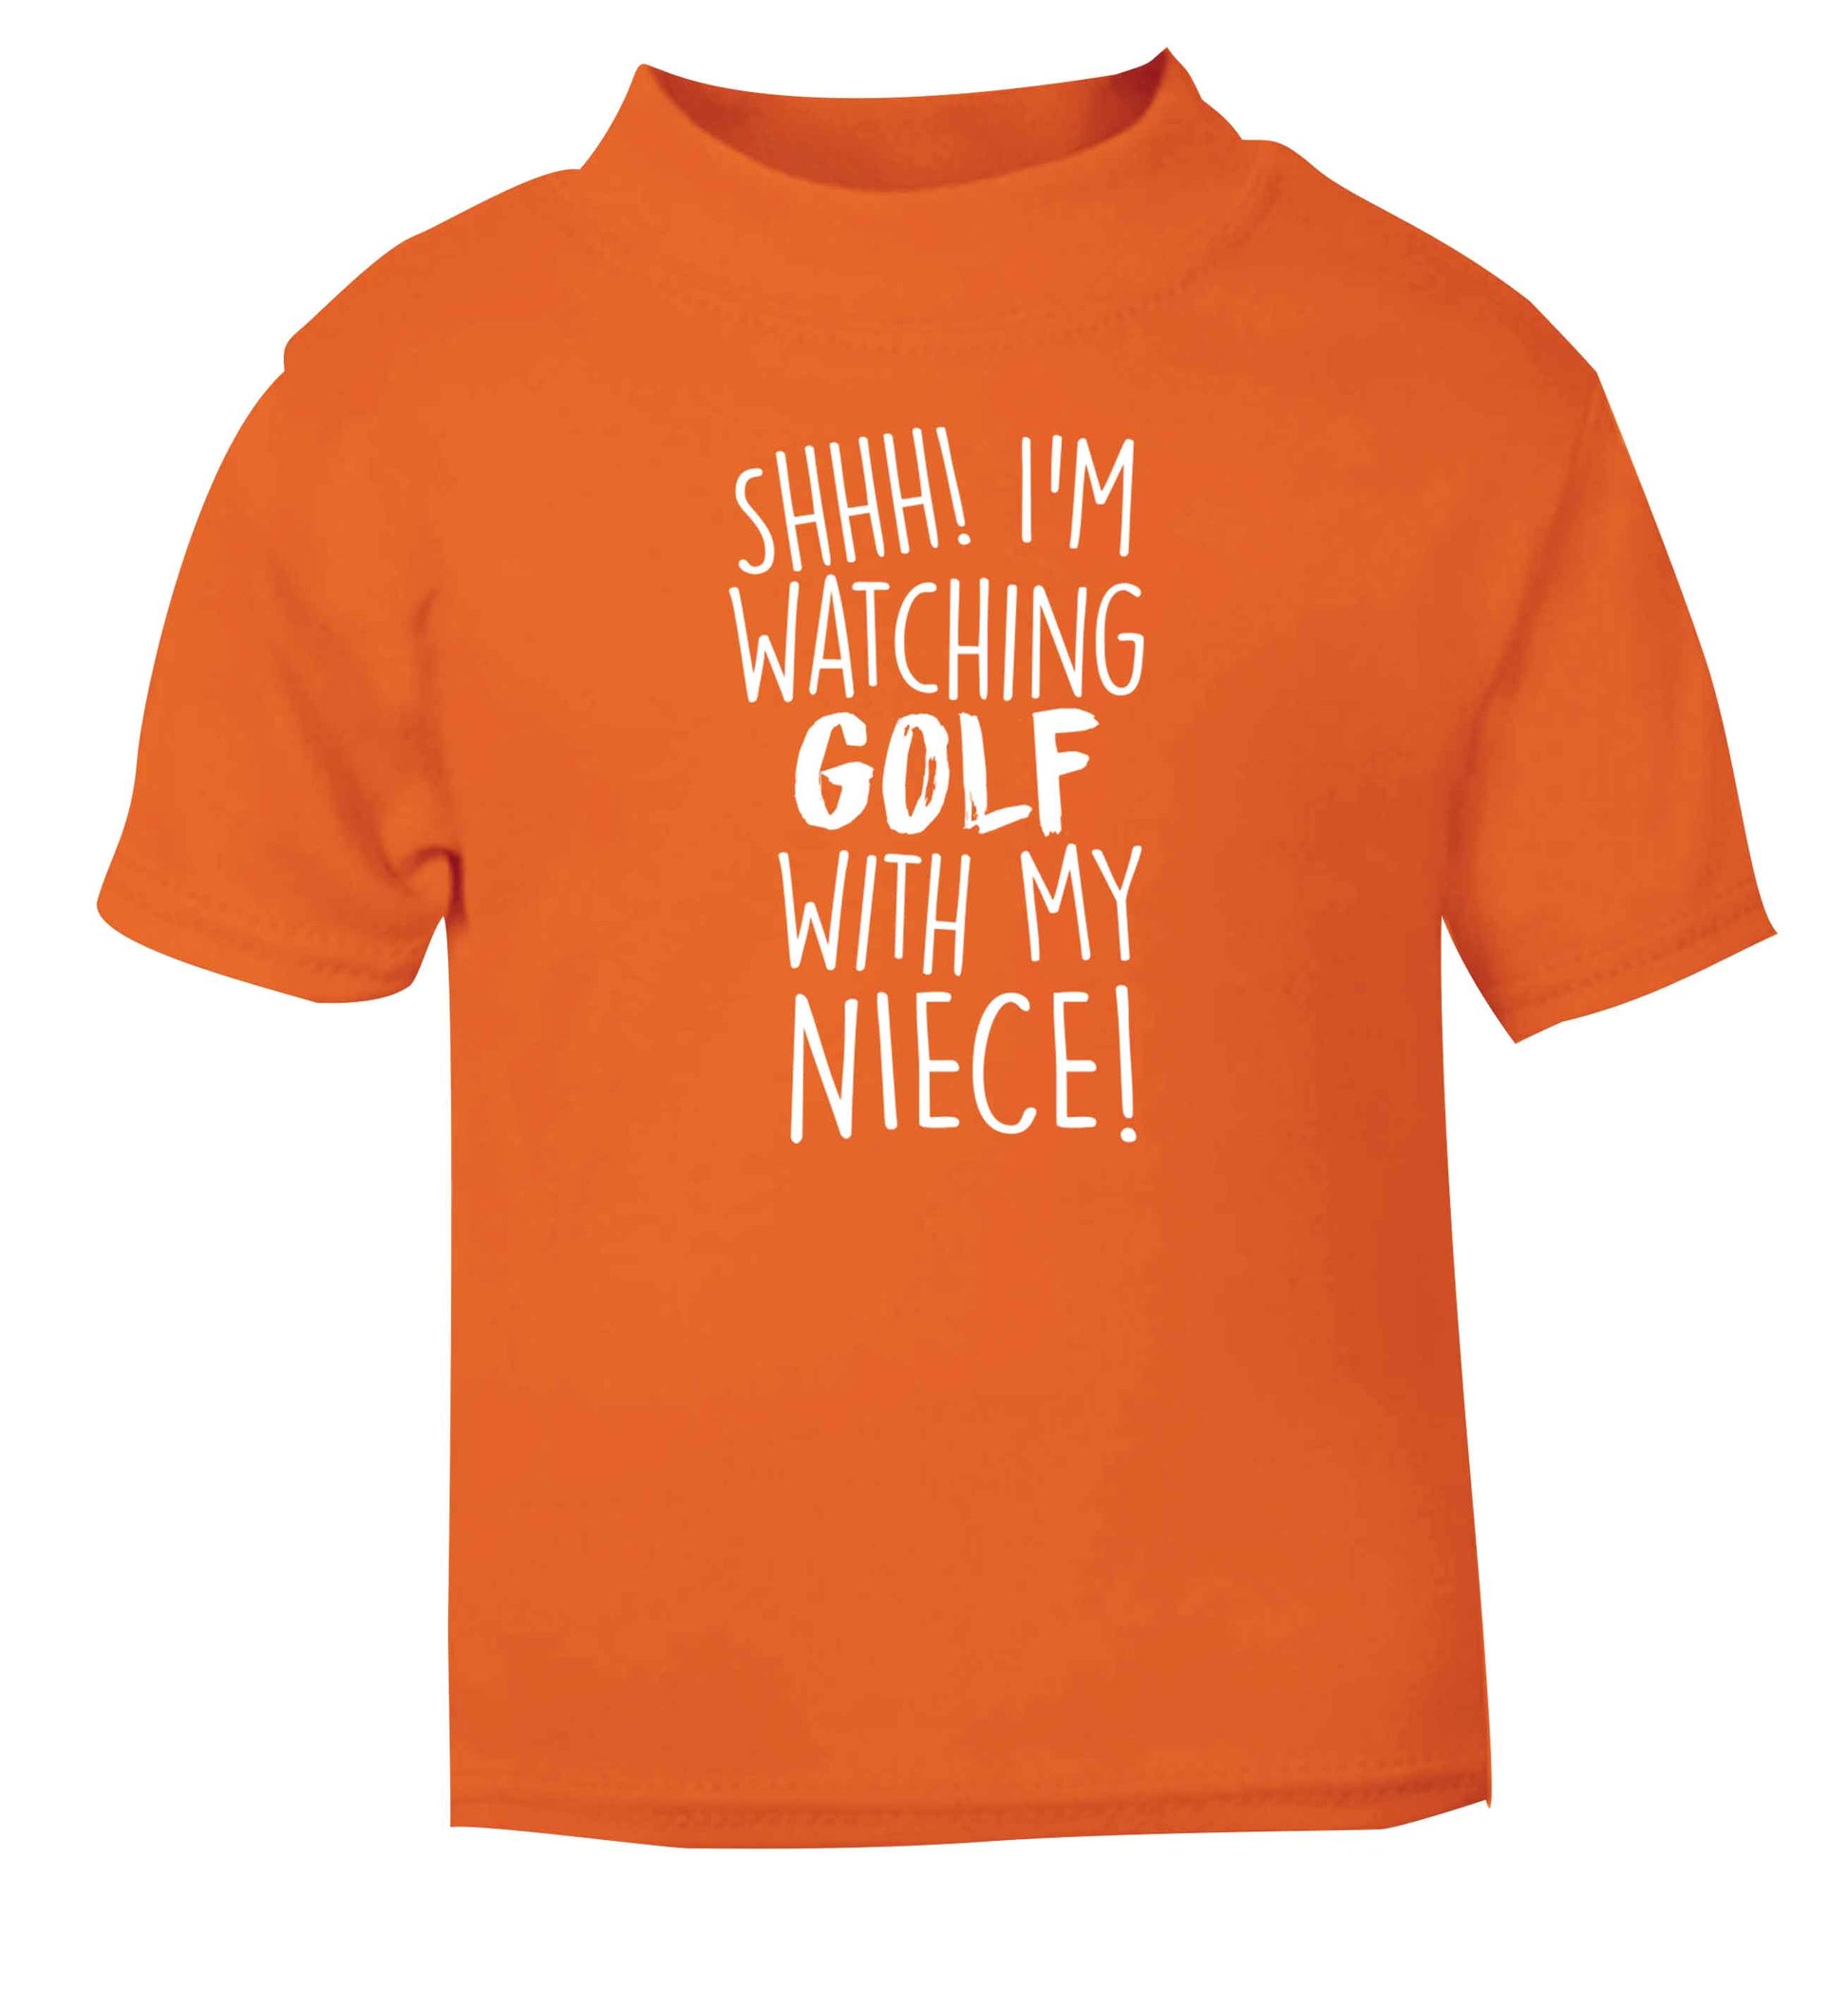 Shh I'm watching golf with my niece orange Baby Toddler Tshirt 2 Years